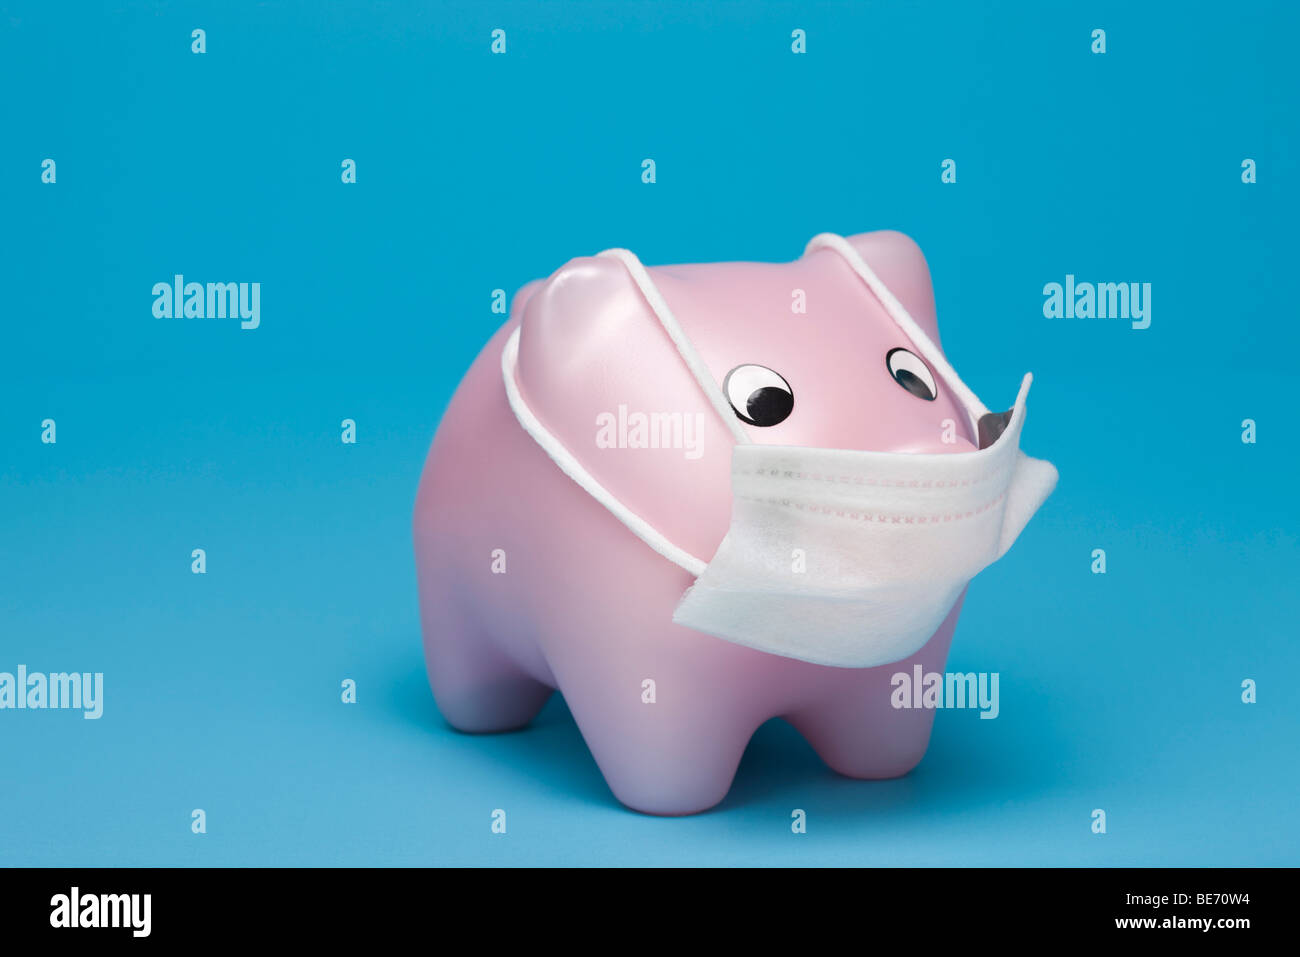 Swine flu concept, toy pig wearing flu mask Stock Photo